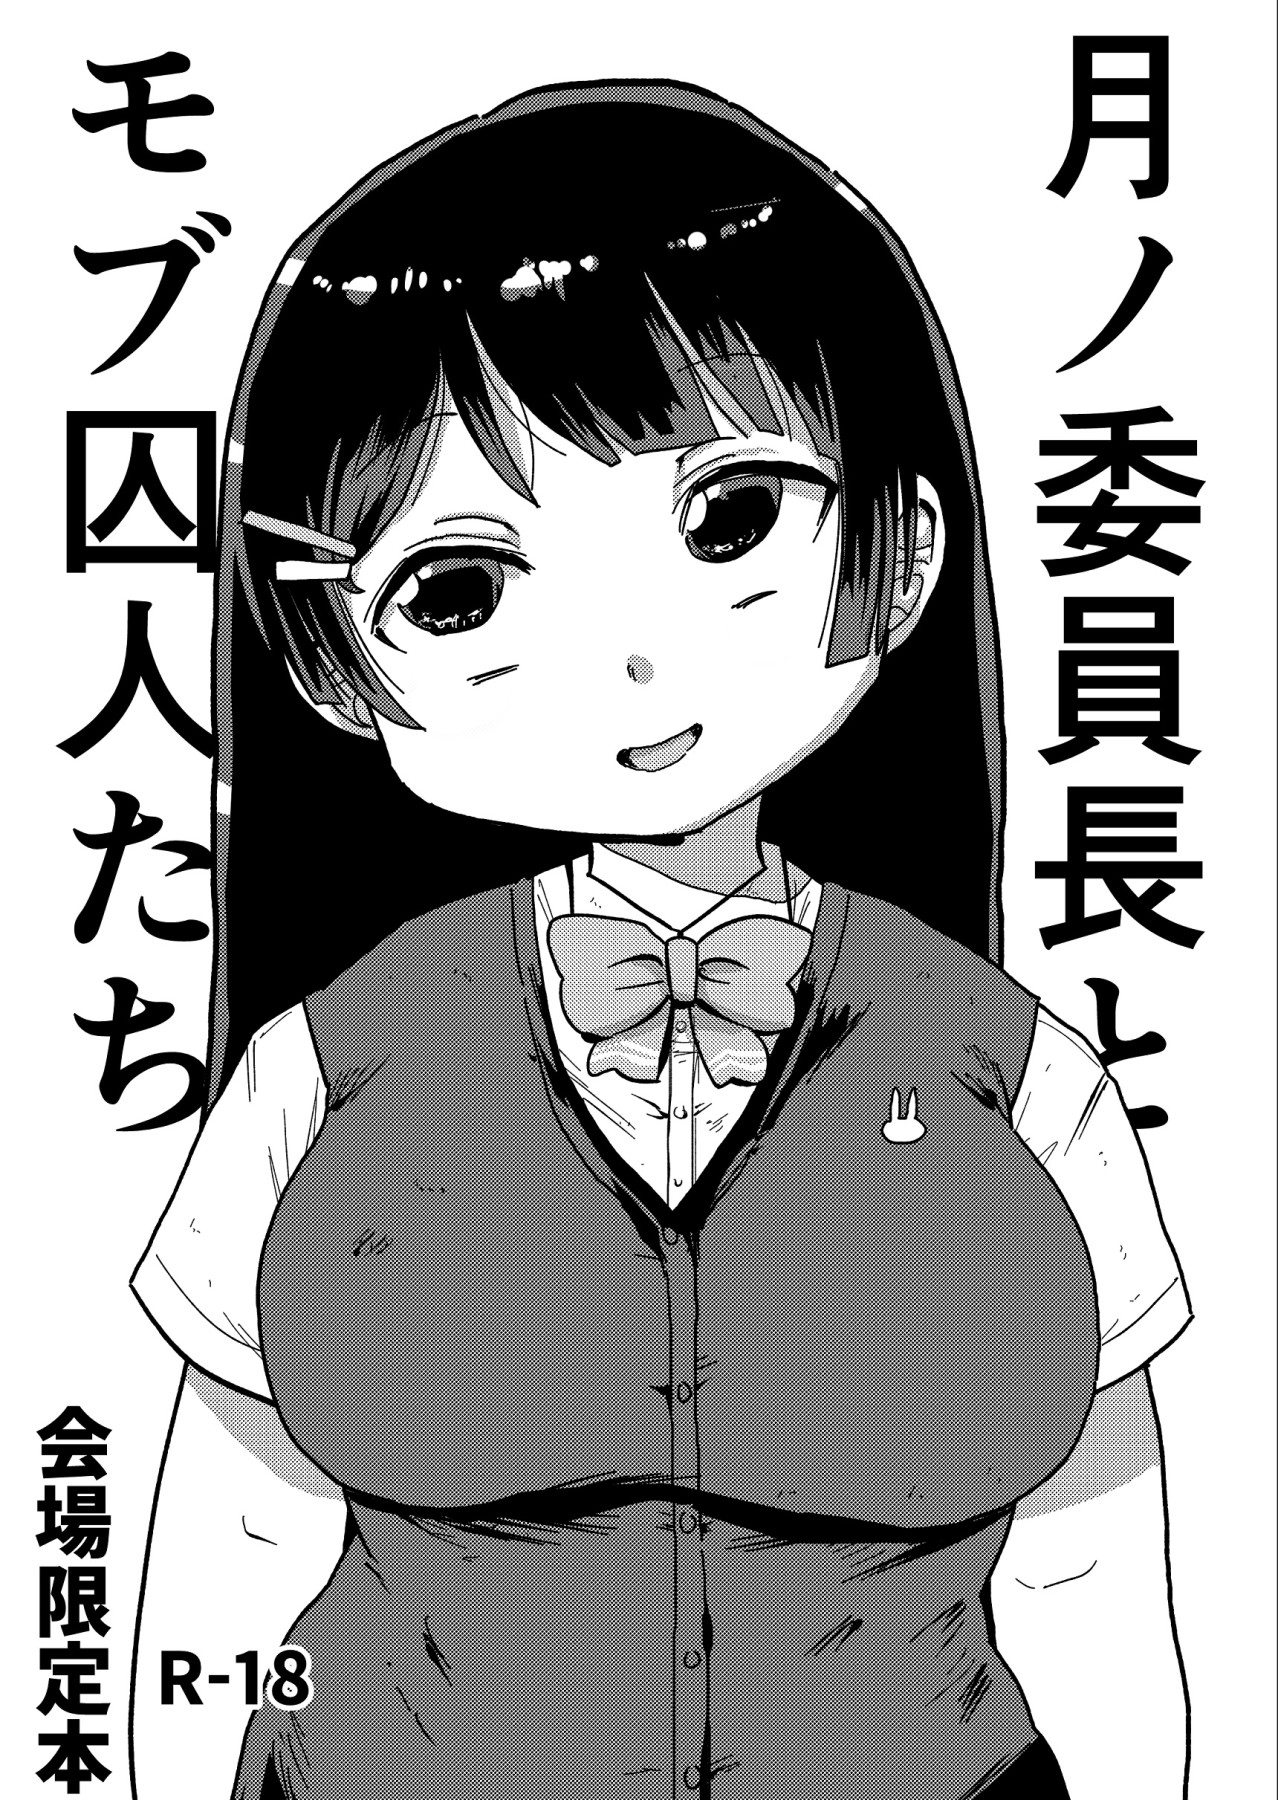 Hentai Manga Comic-Commitee Chairman Tsukino And The Prisoner Background Characters-Read-1